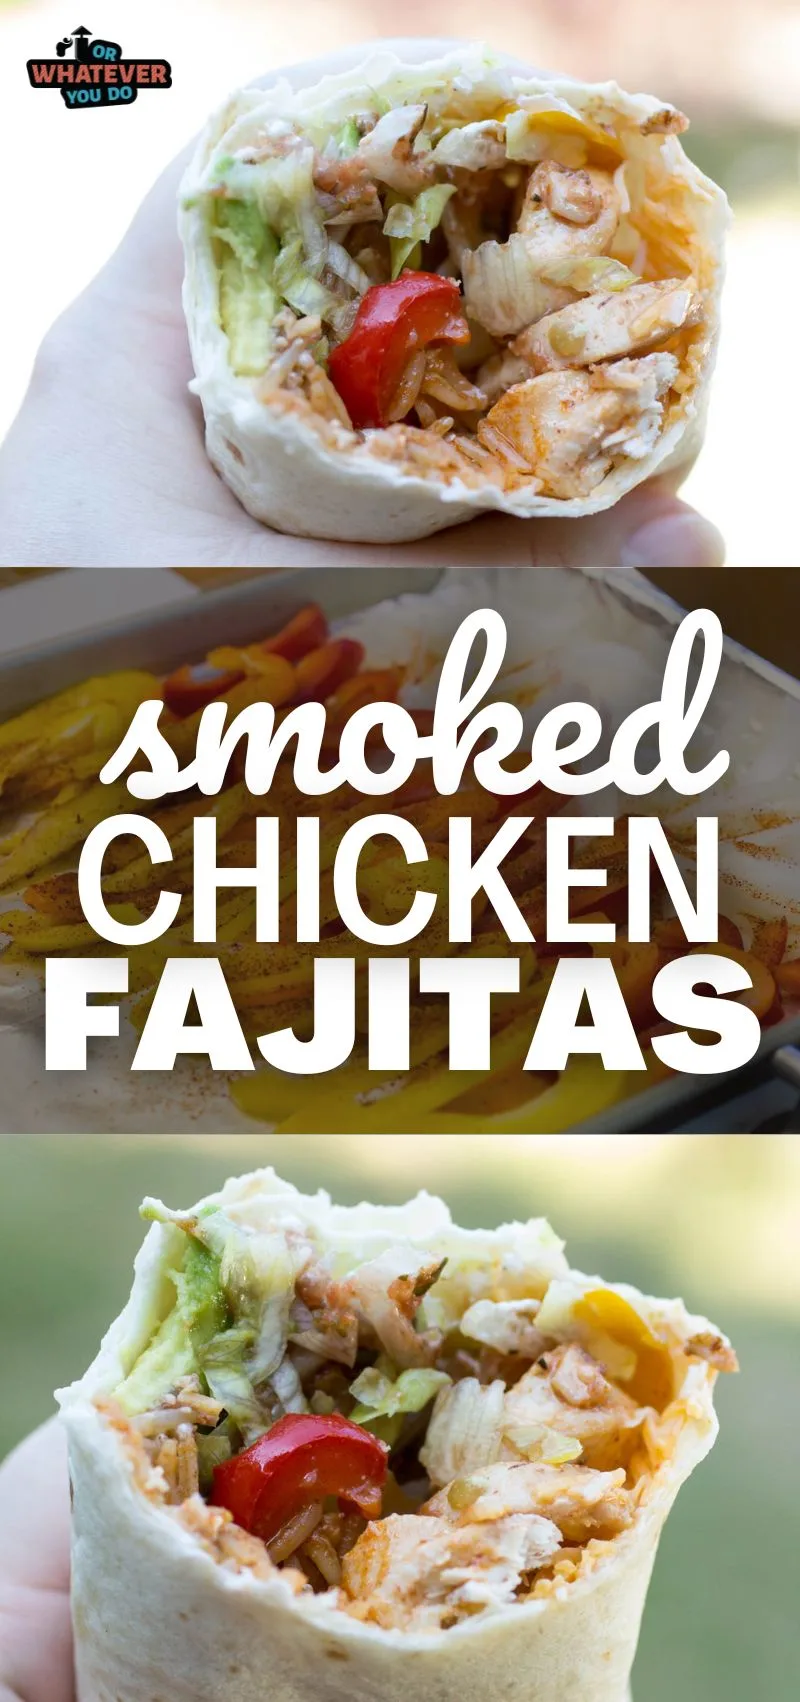 Traeger Sheet Pan Chicken Fajitas - Grilled homemade fajitas